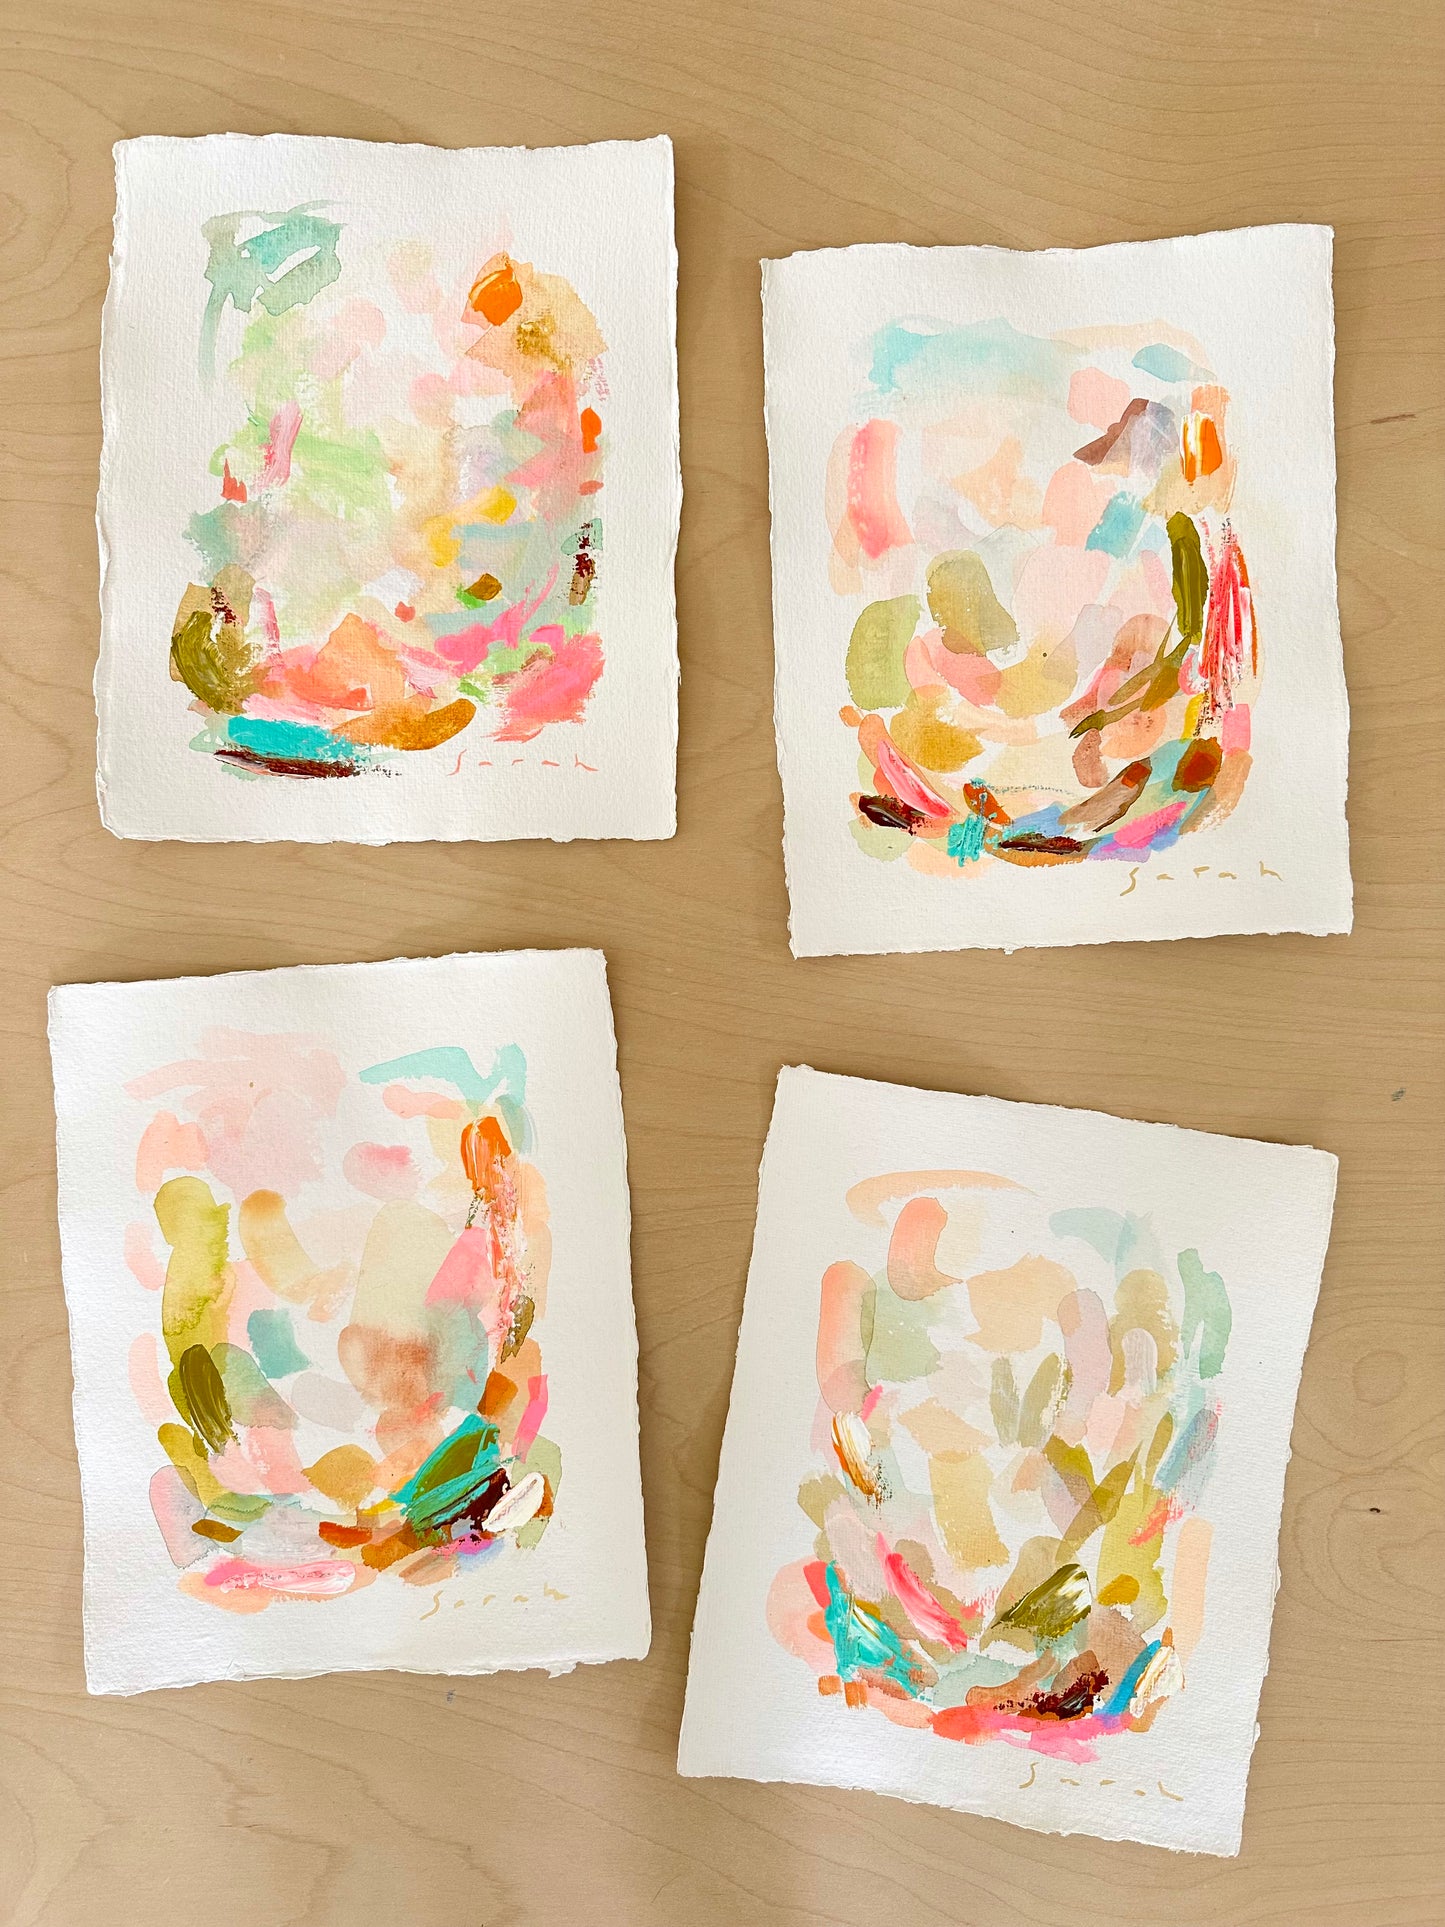 8” x 10” on Handmade Paper